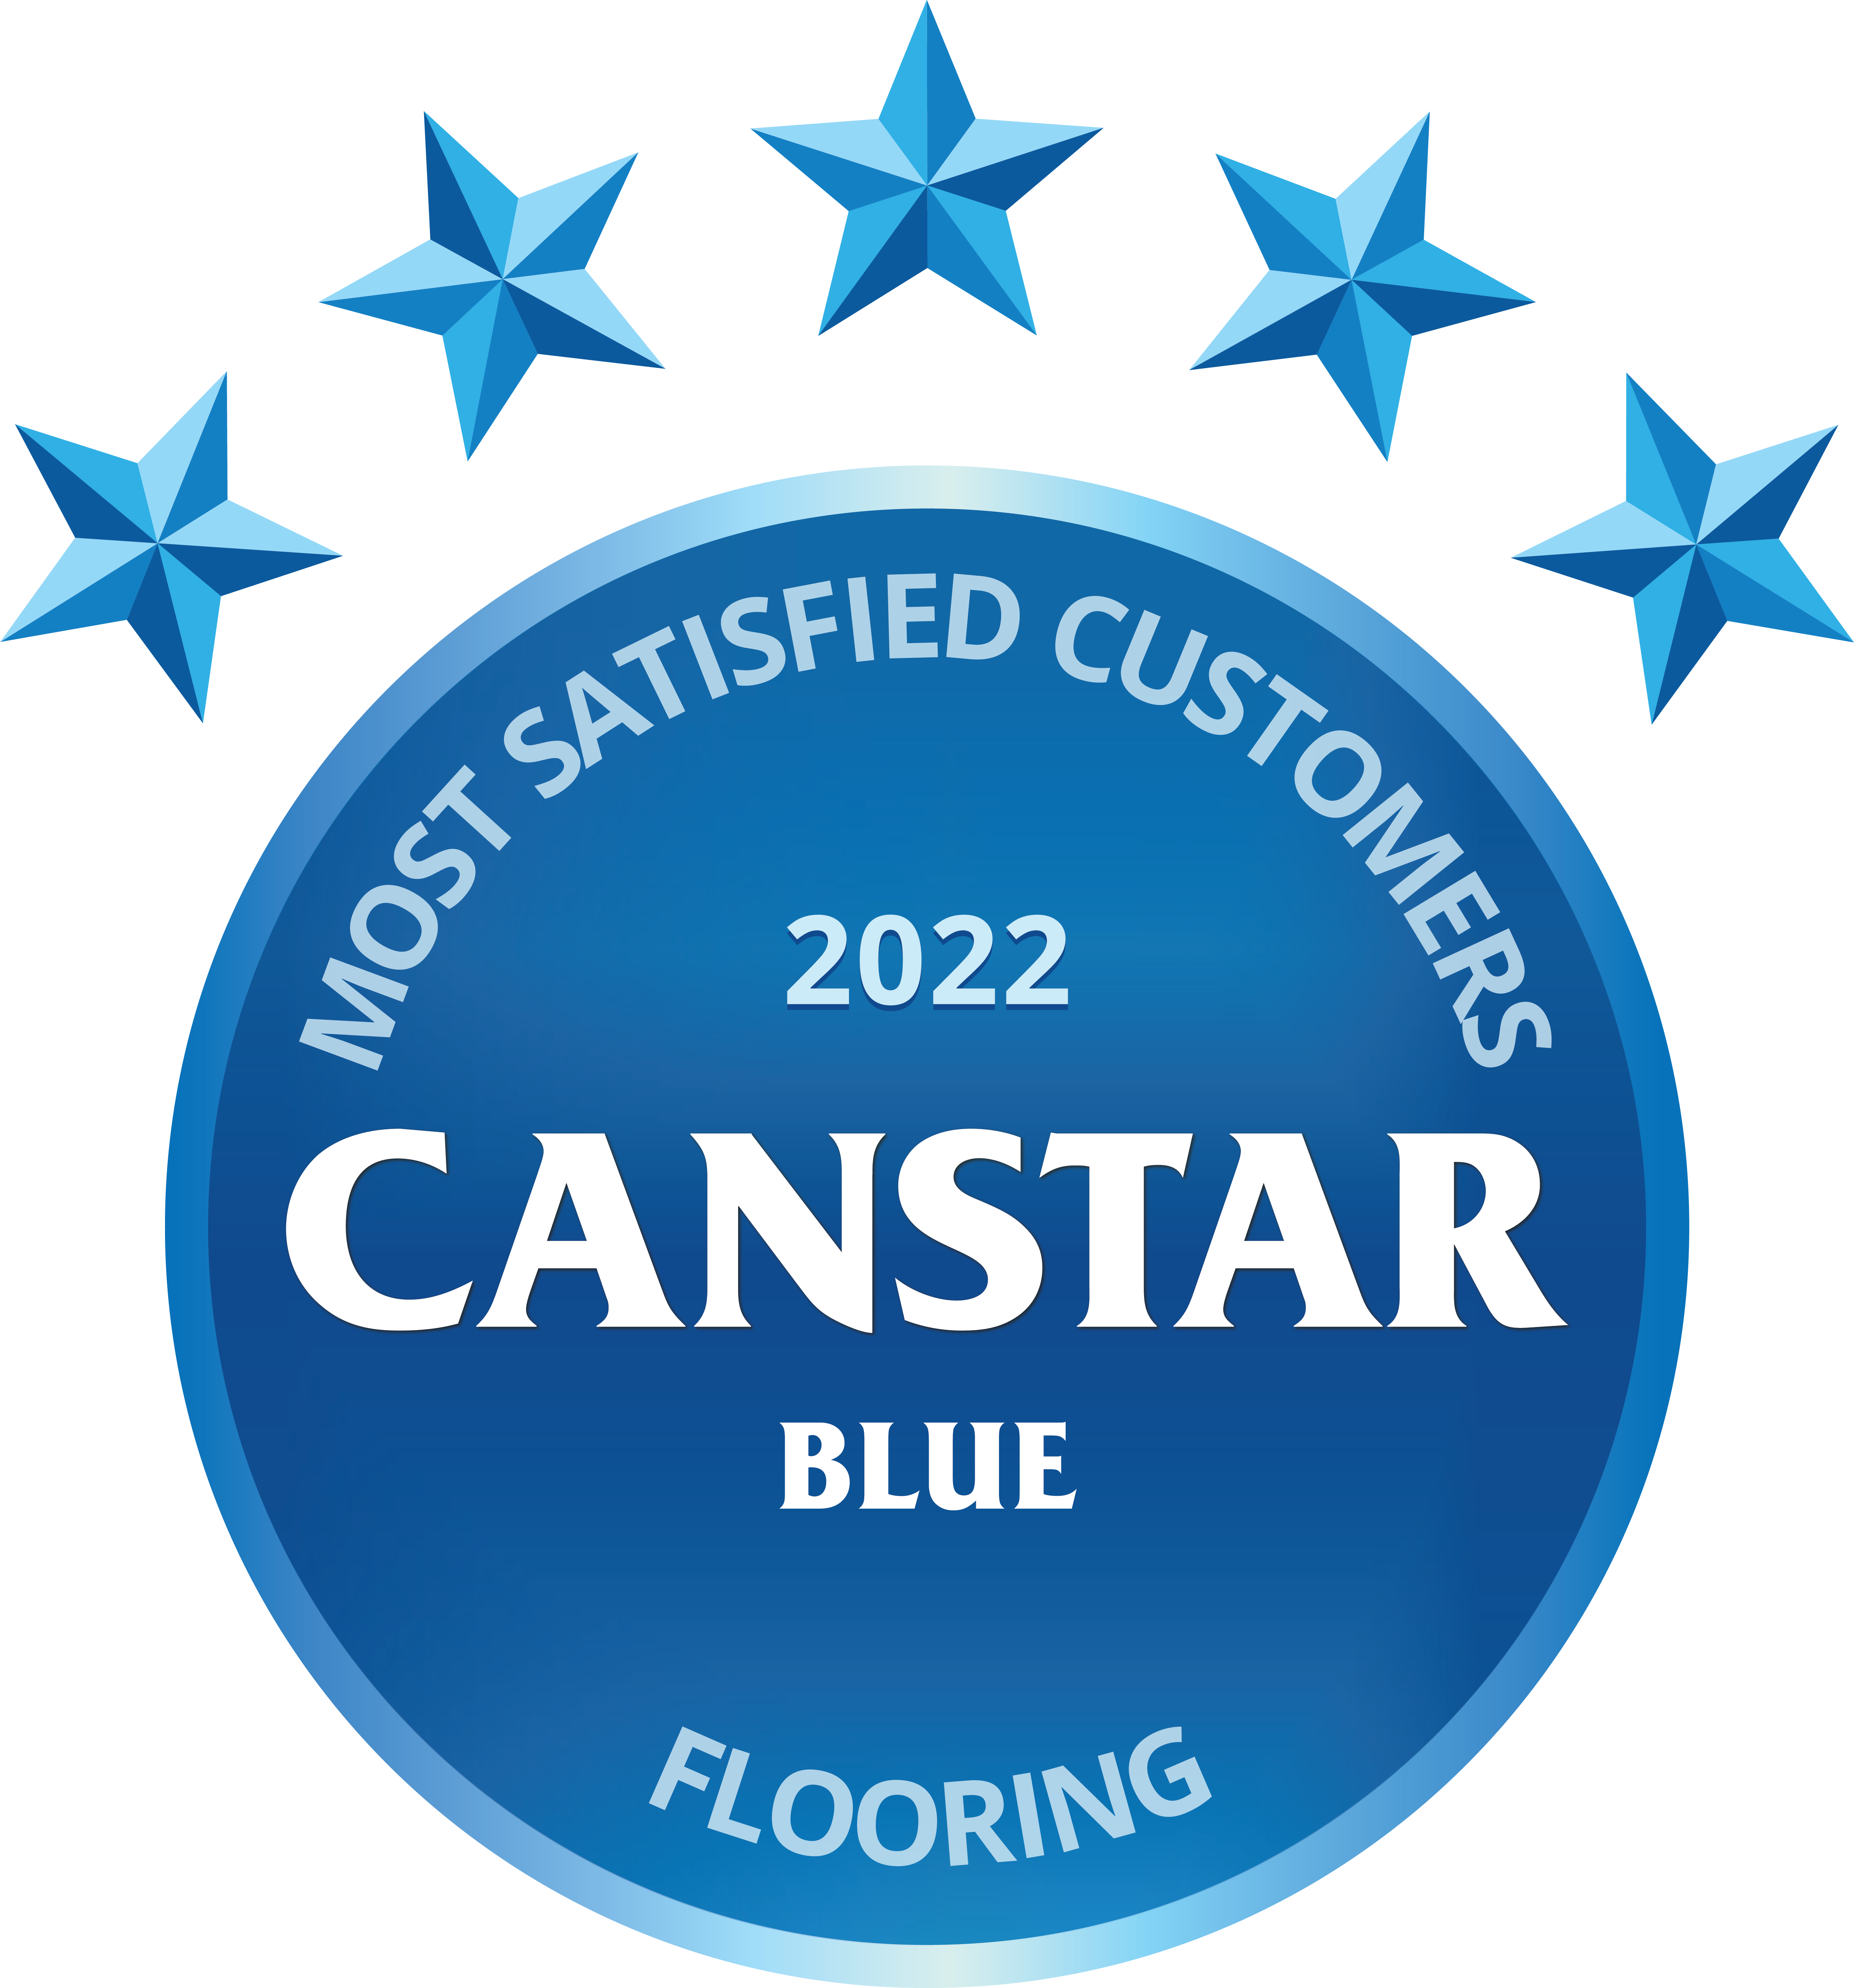 most satisfied customers flooring award 2022 logo